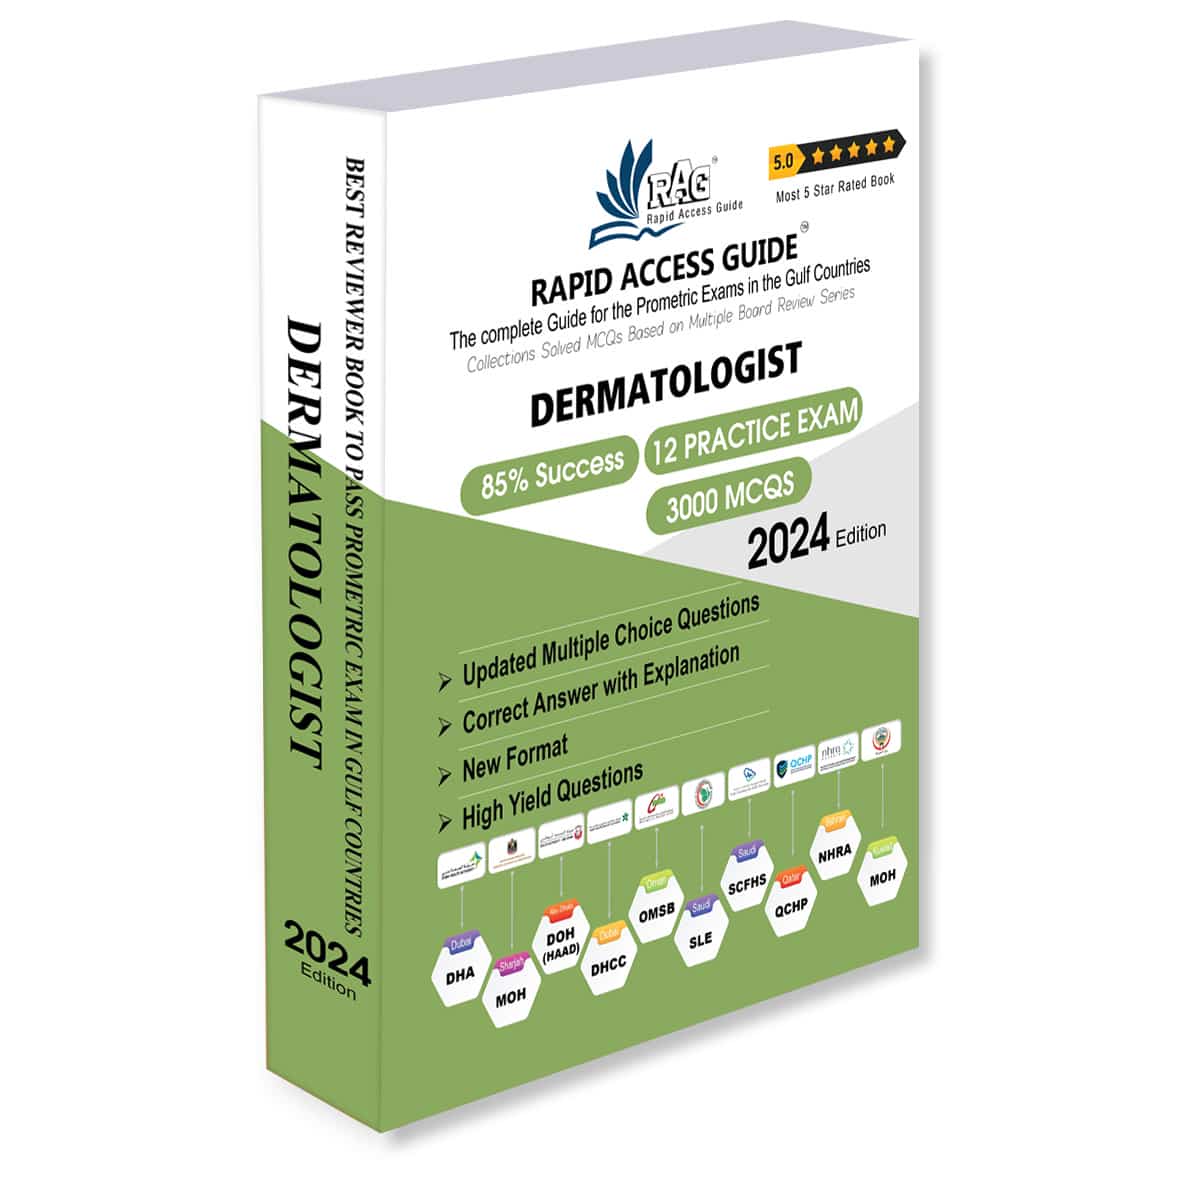 Dermatologist MCQ Book | Prometric Exam Questions – 2024